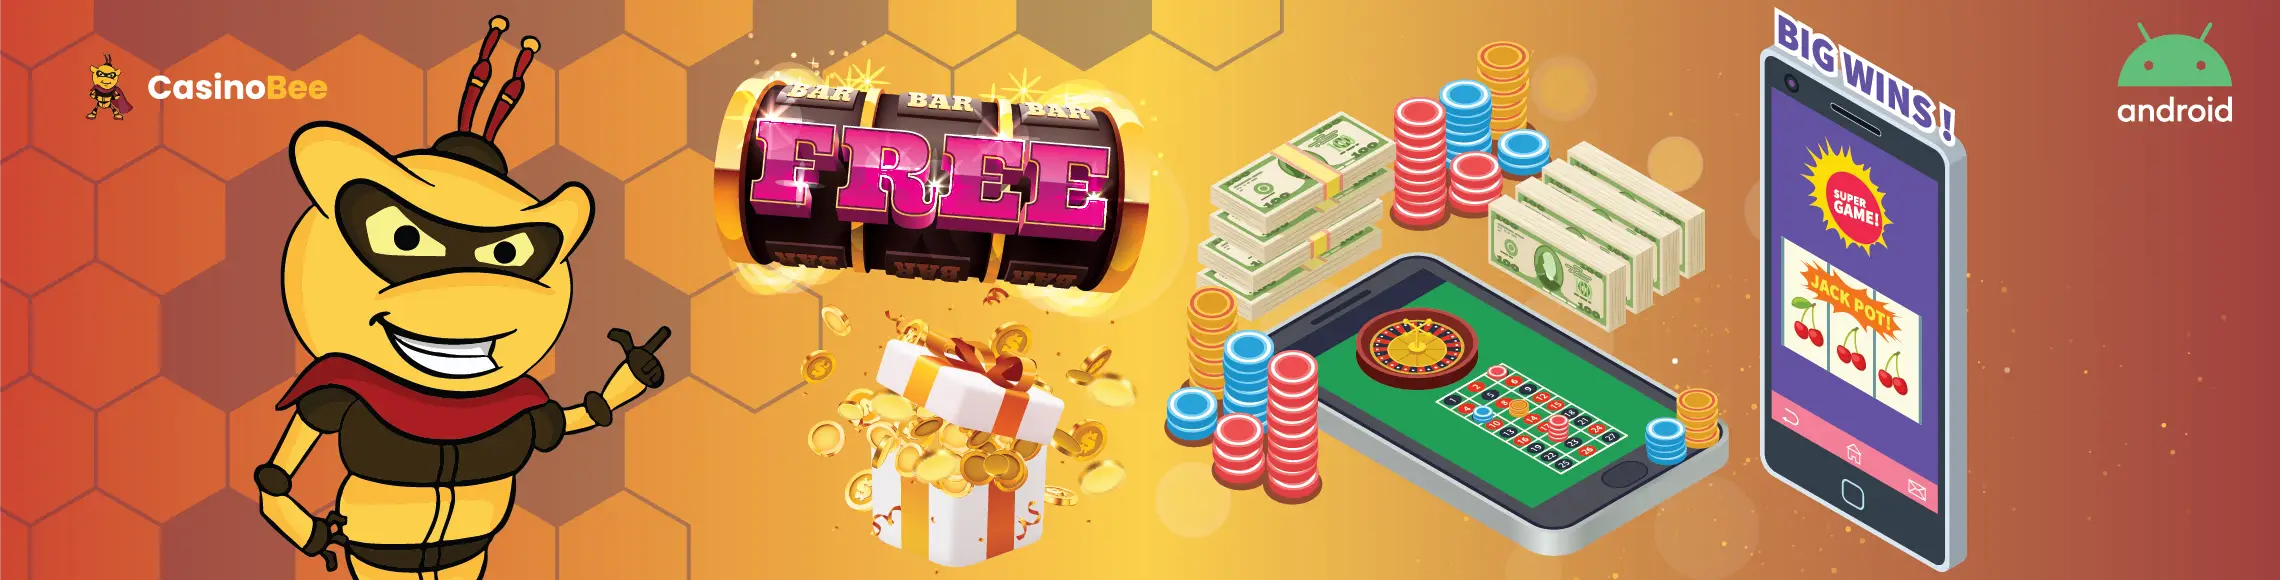 android casinos bonuses